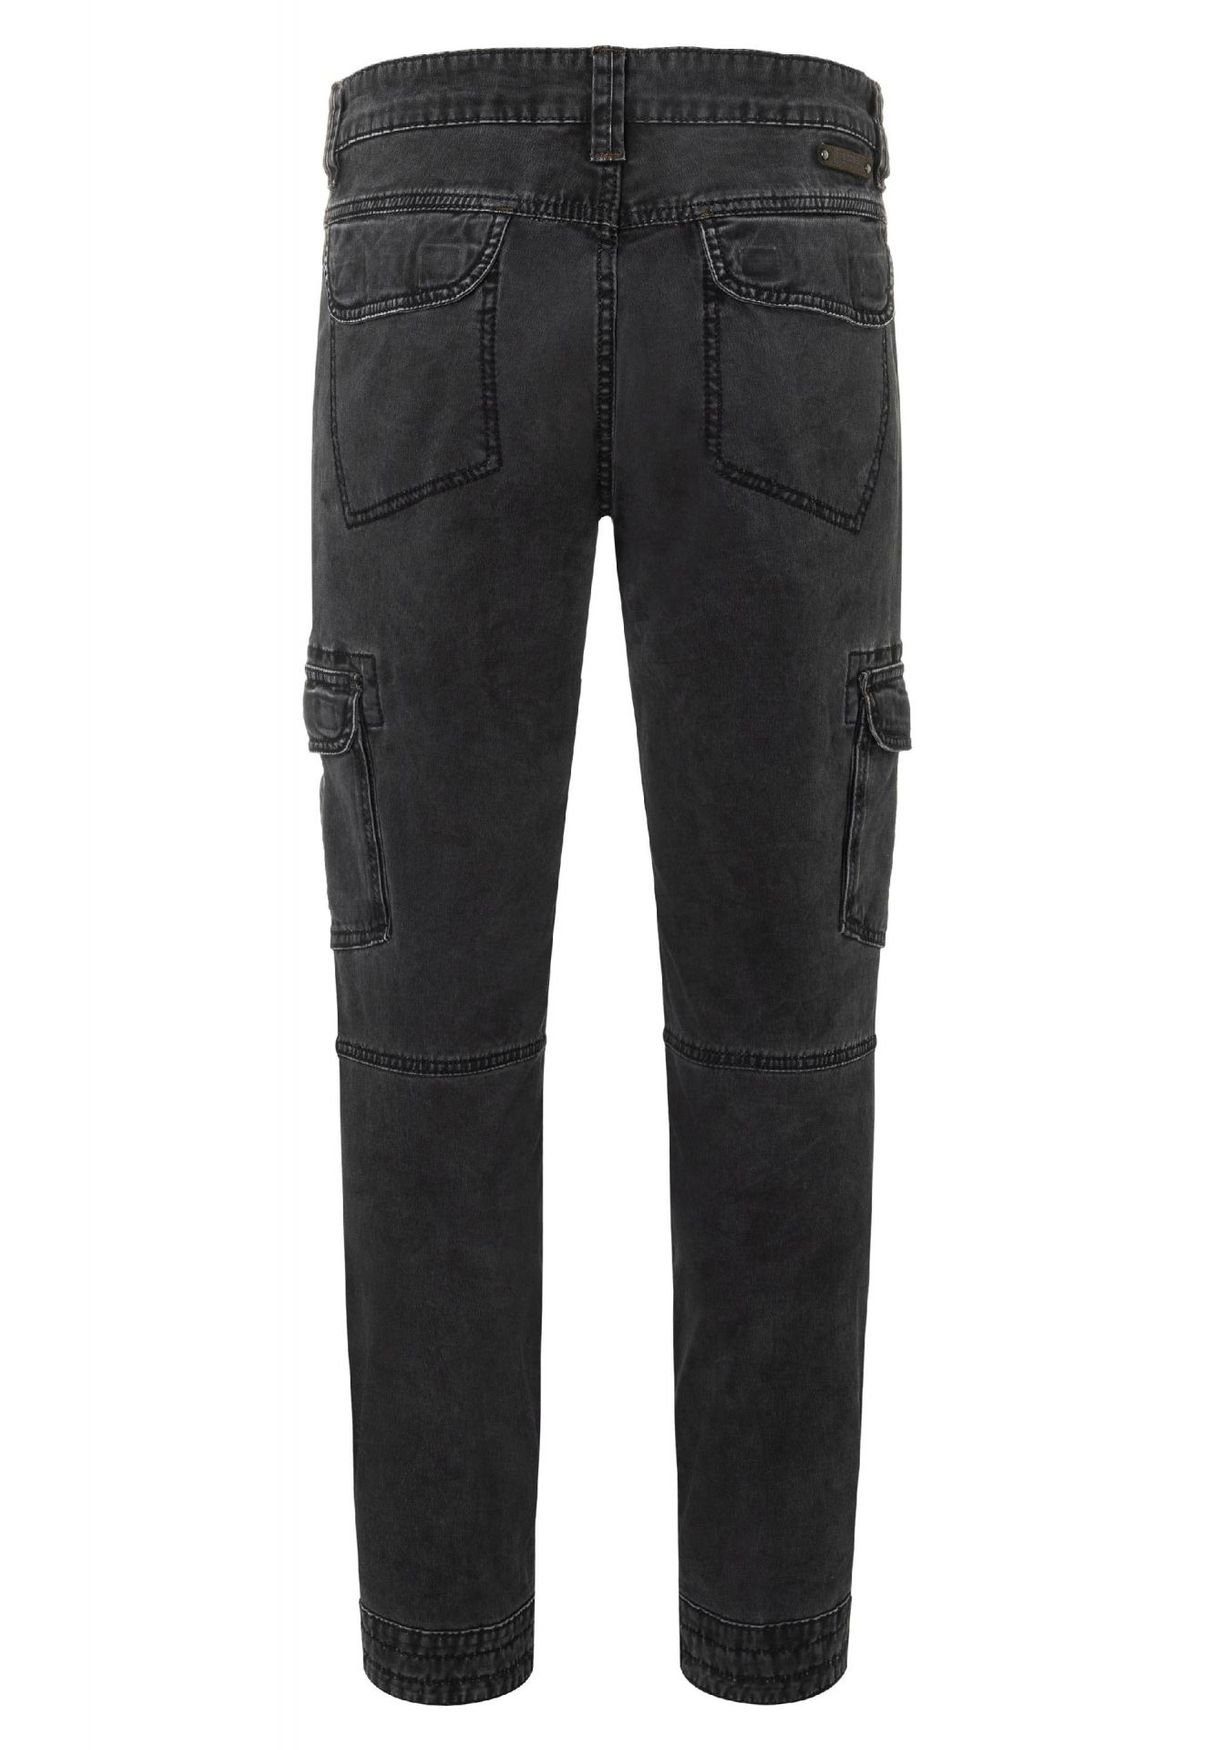 TIMEZONE Cargohose Cargo Denim BenTZ Hose 5178 Slim in Schwarz Stretch Fit Regular Jeans